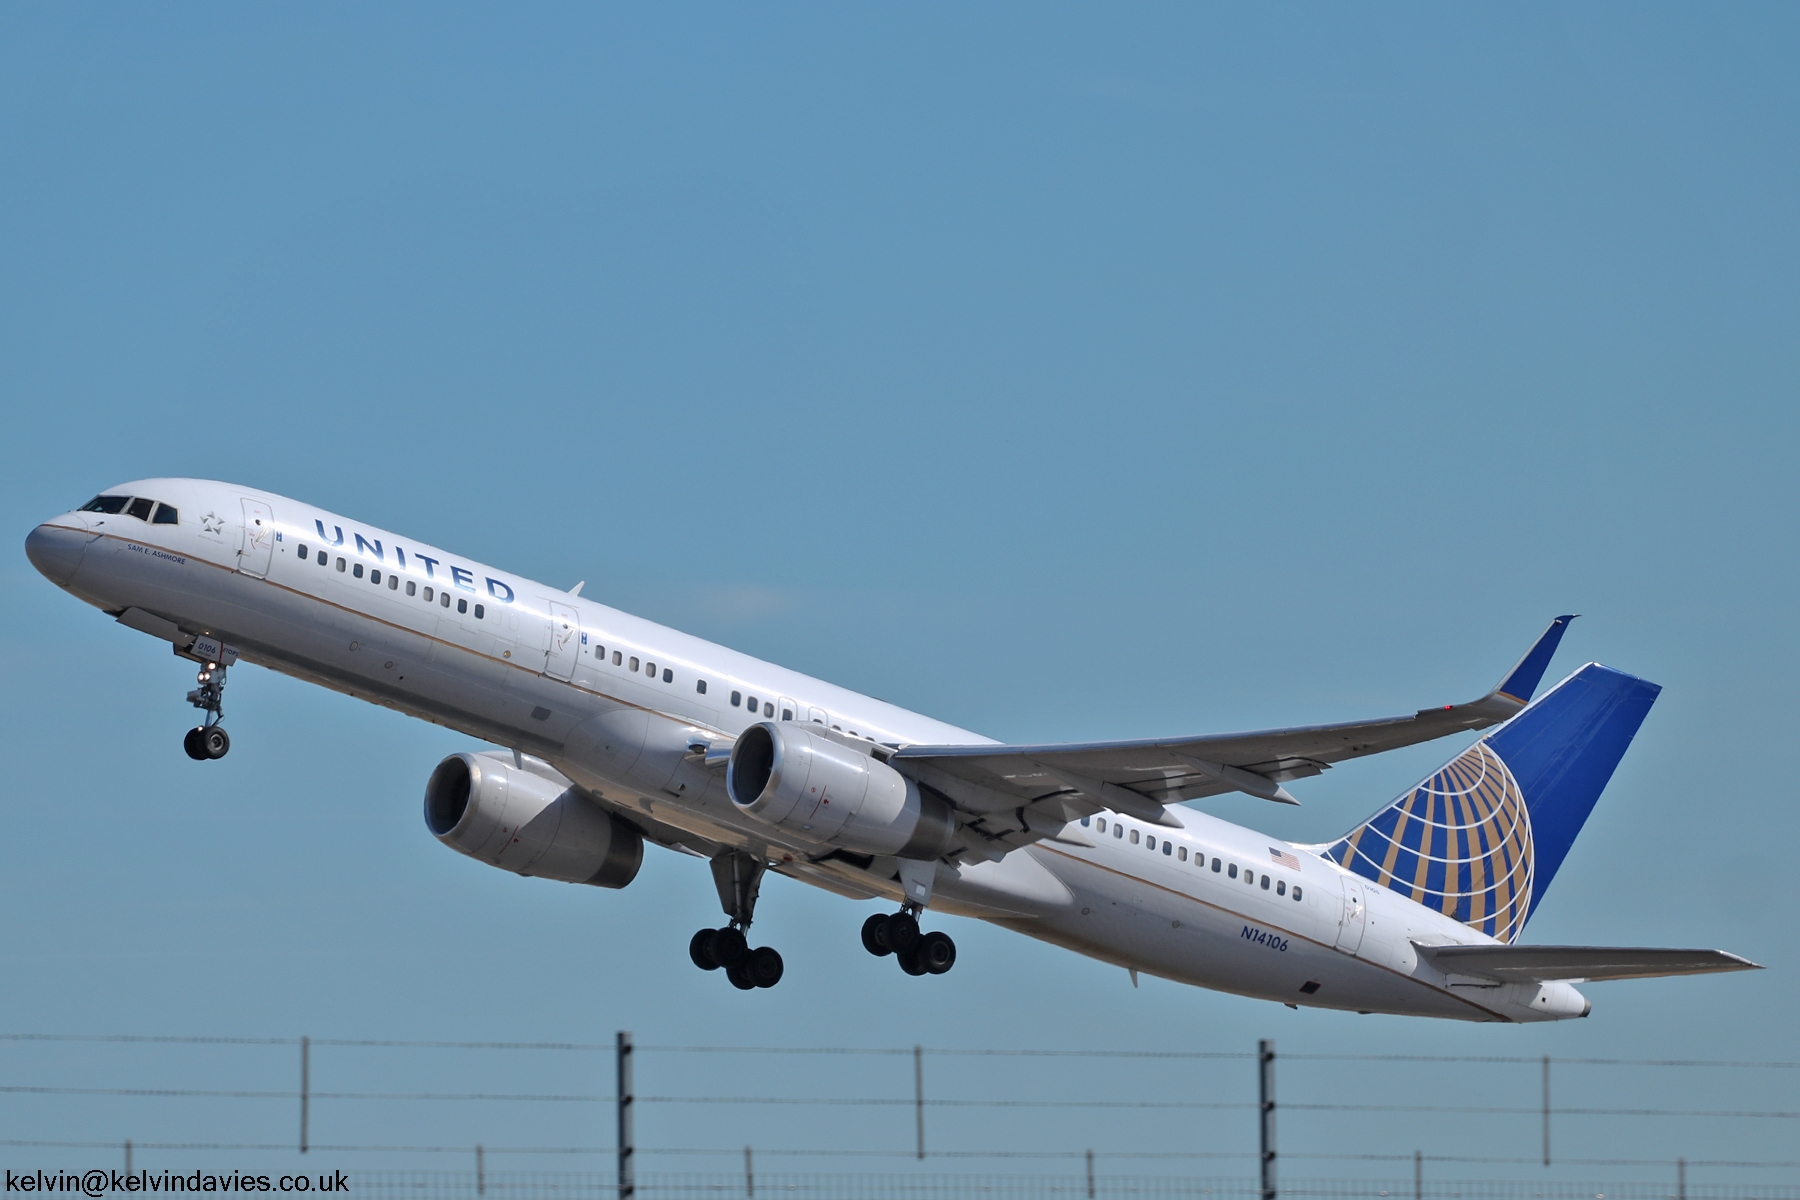 United Airlines 757 N14106